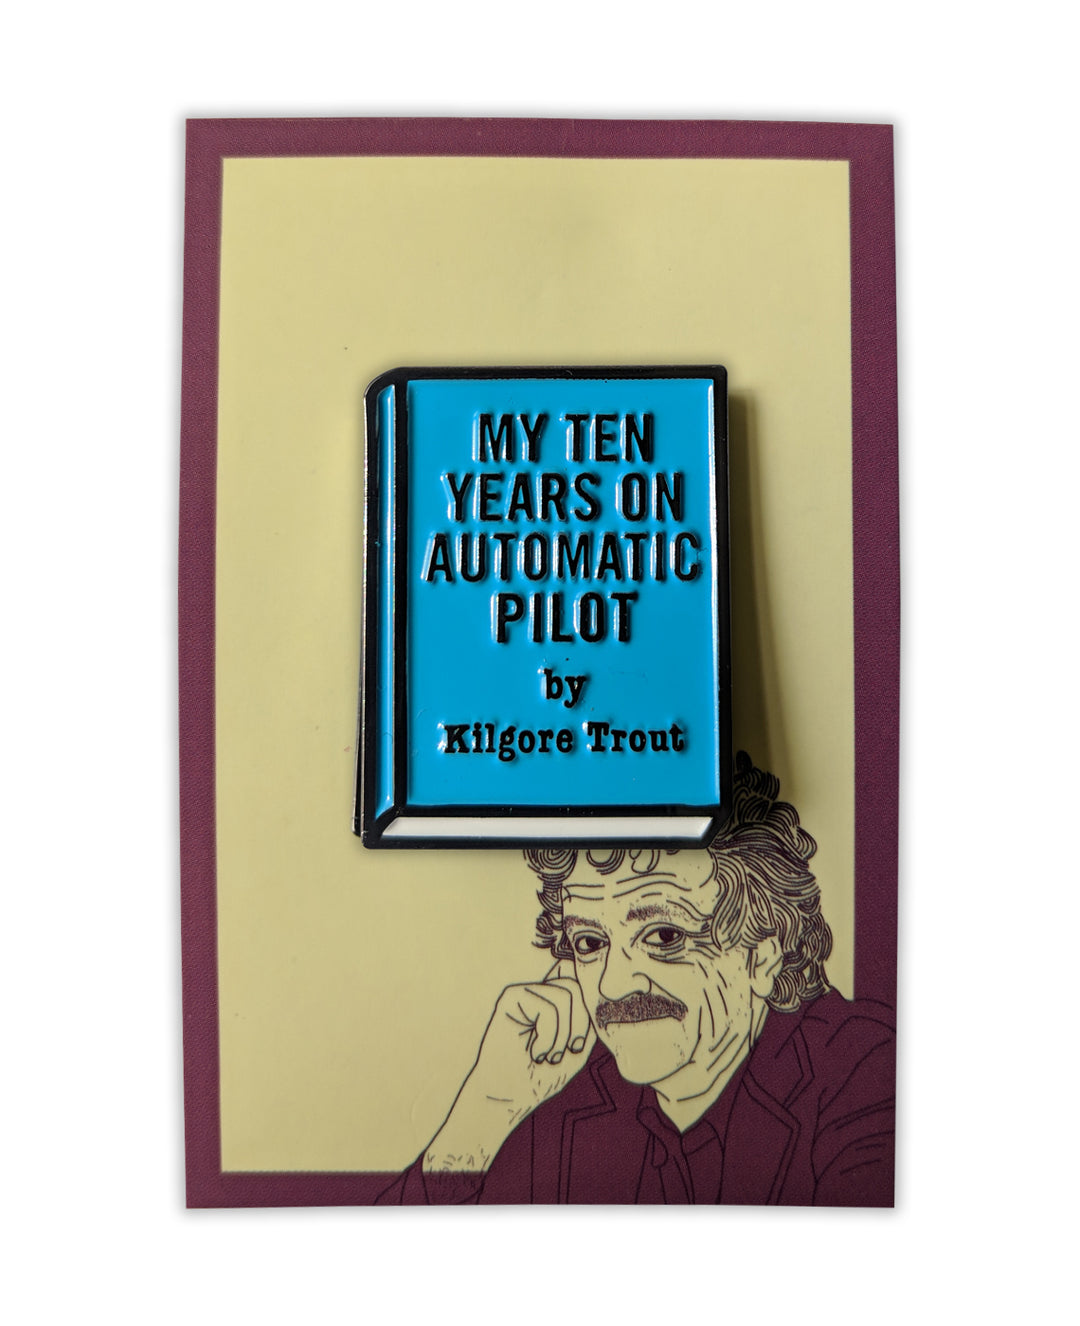 Kurt Vonnegut Enamel Pin - "My Ten Years On Automatic Pilot"